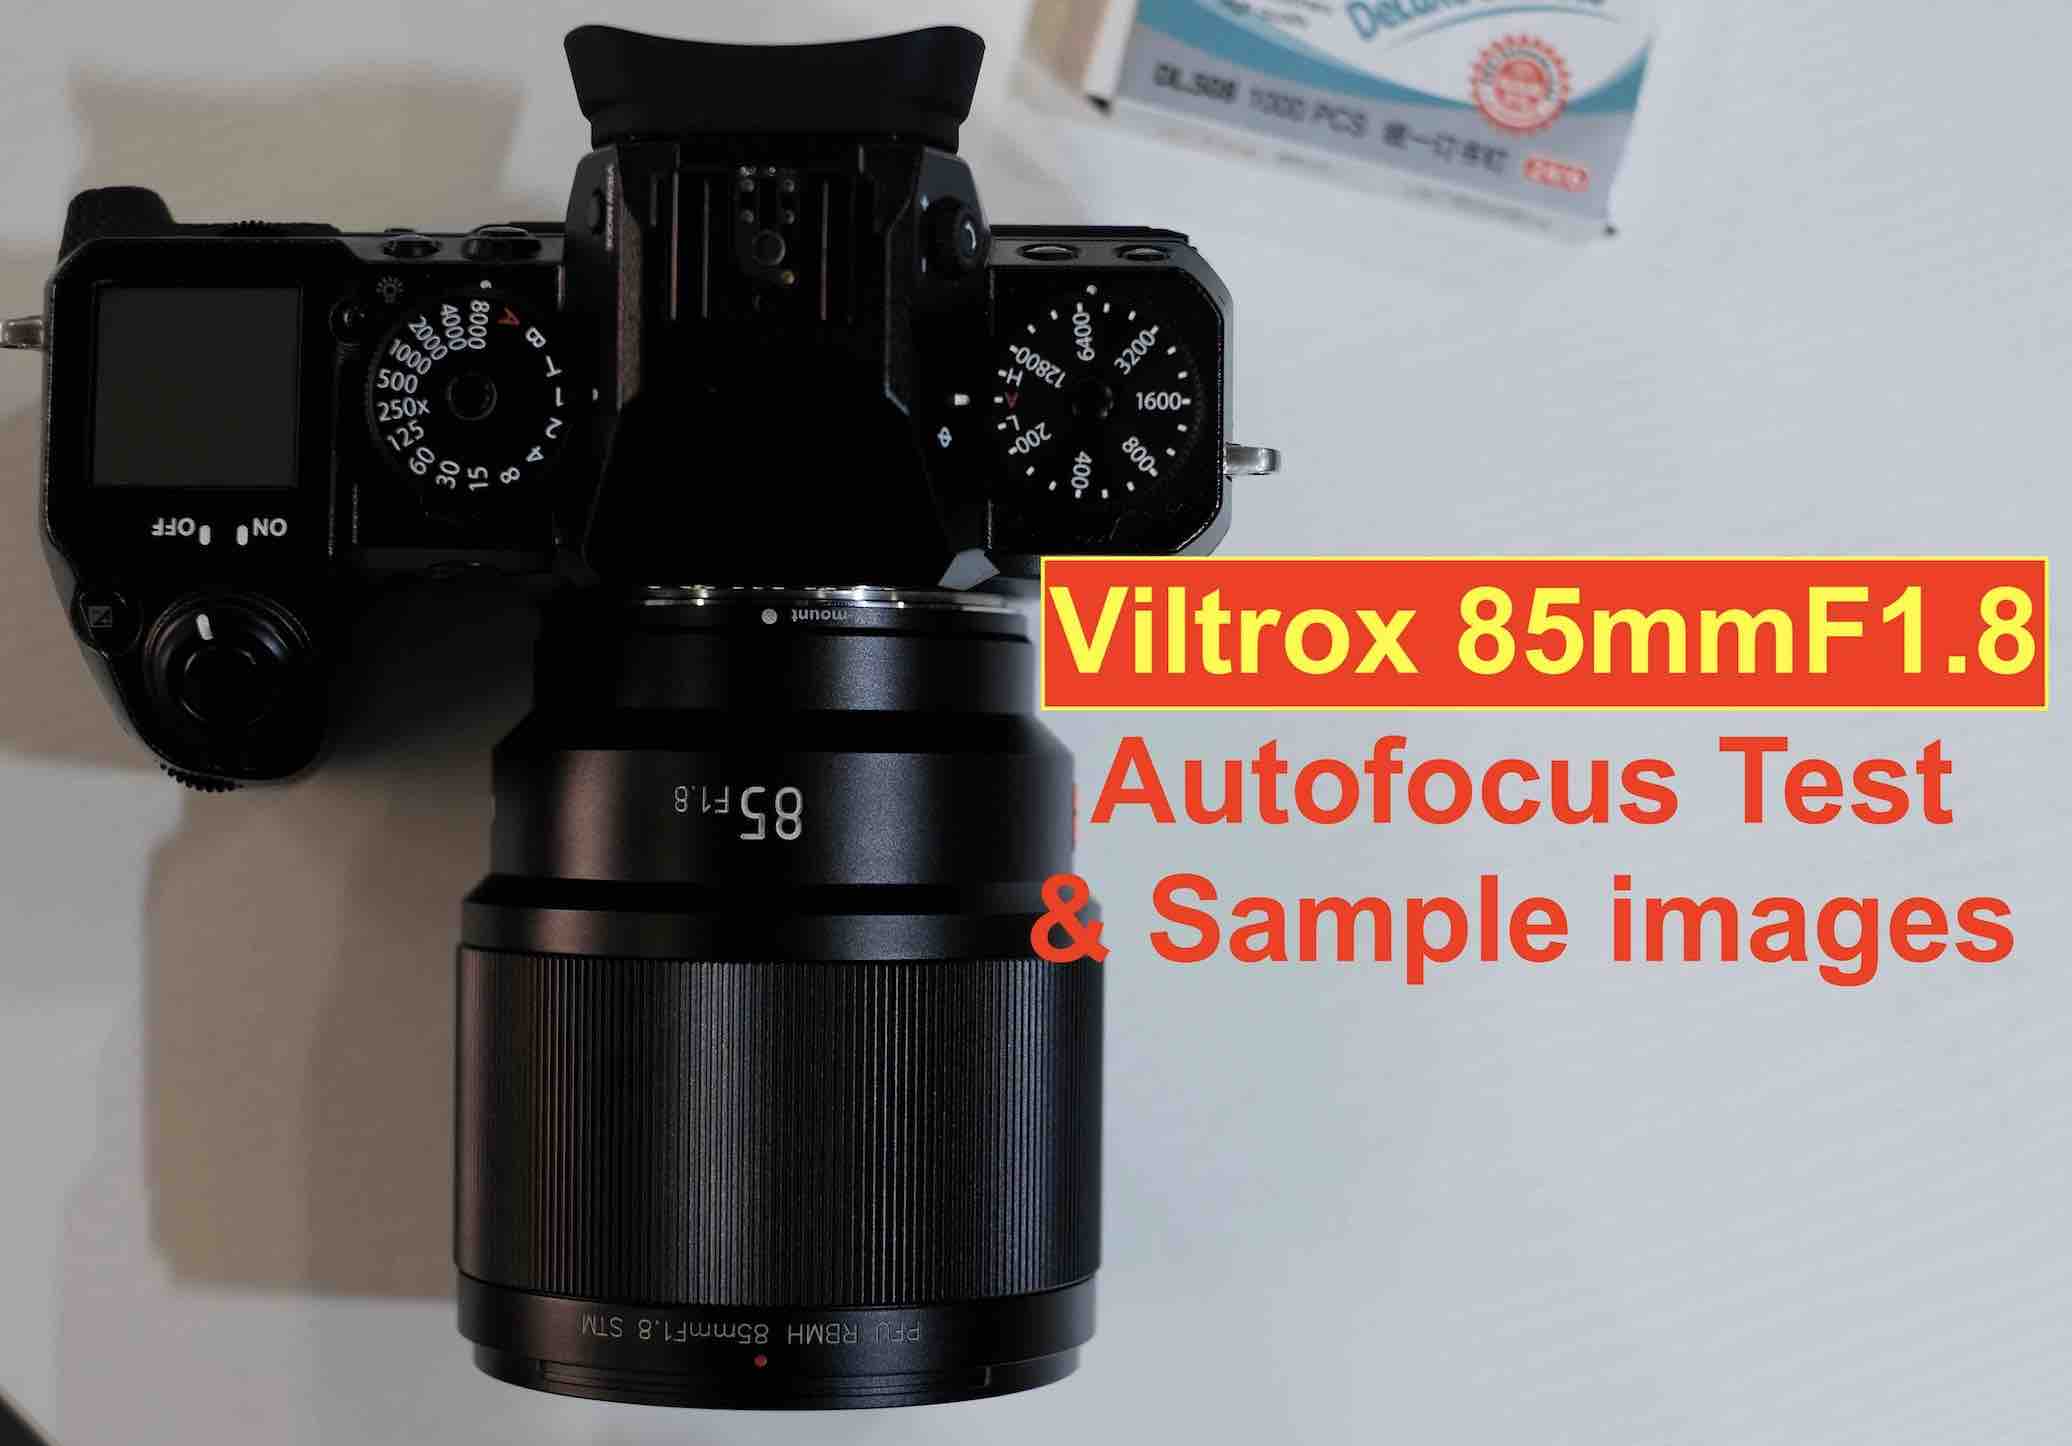 Gedeeltelijk Gietvorm Rationeel Viltrox 85mm F1.8 for Fujifilm X Mount Autofocus Test Video with Sample  Images JPEG and RAW to Download - Fuji Rumors